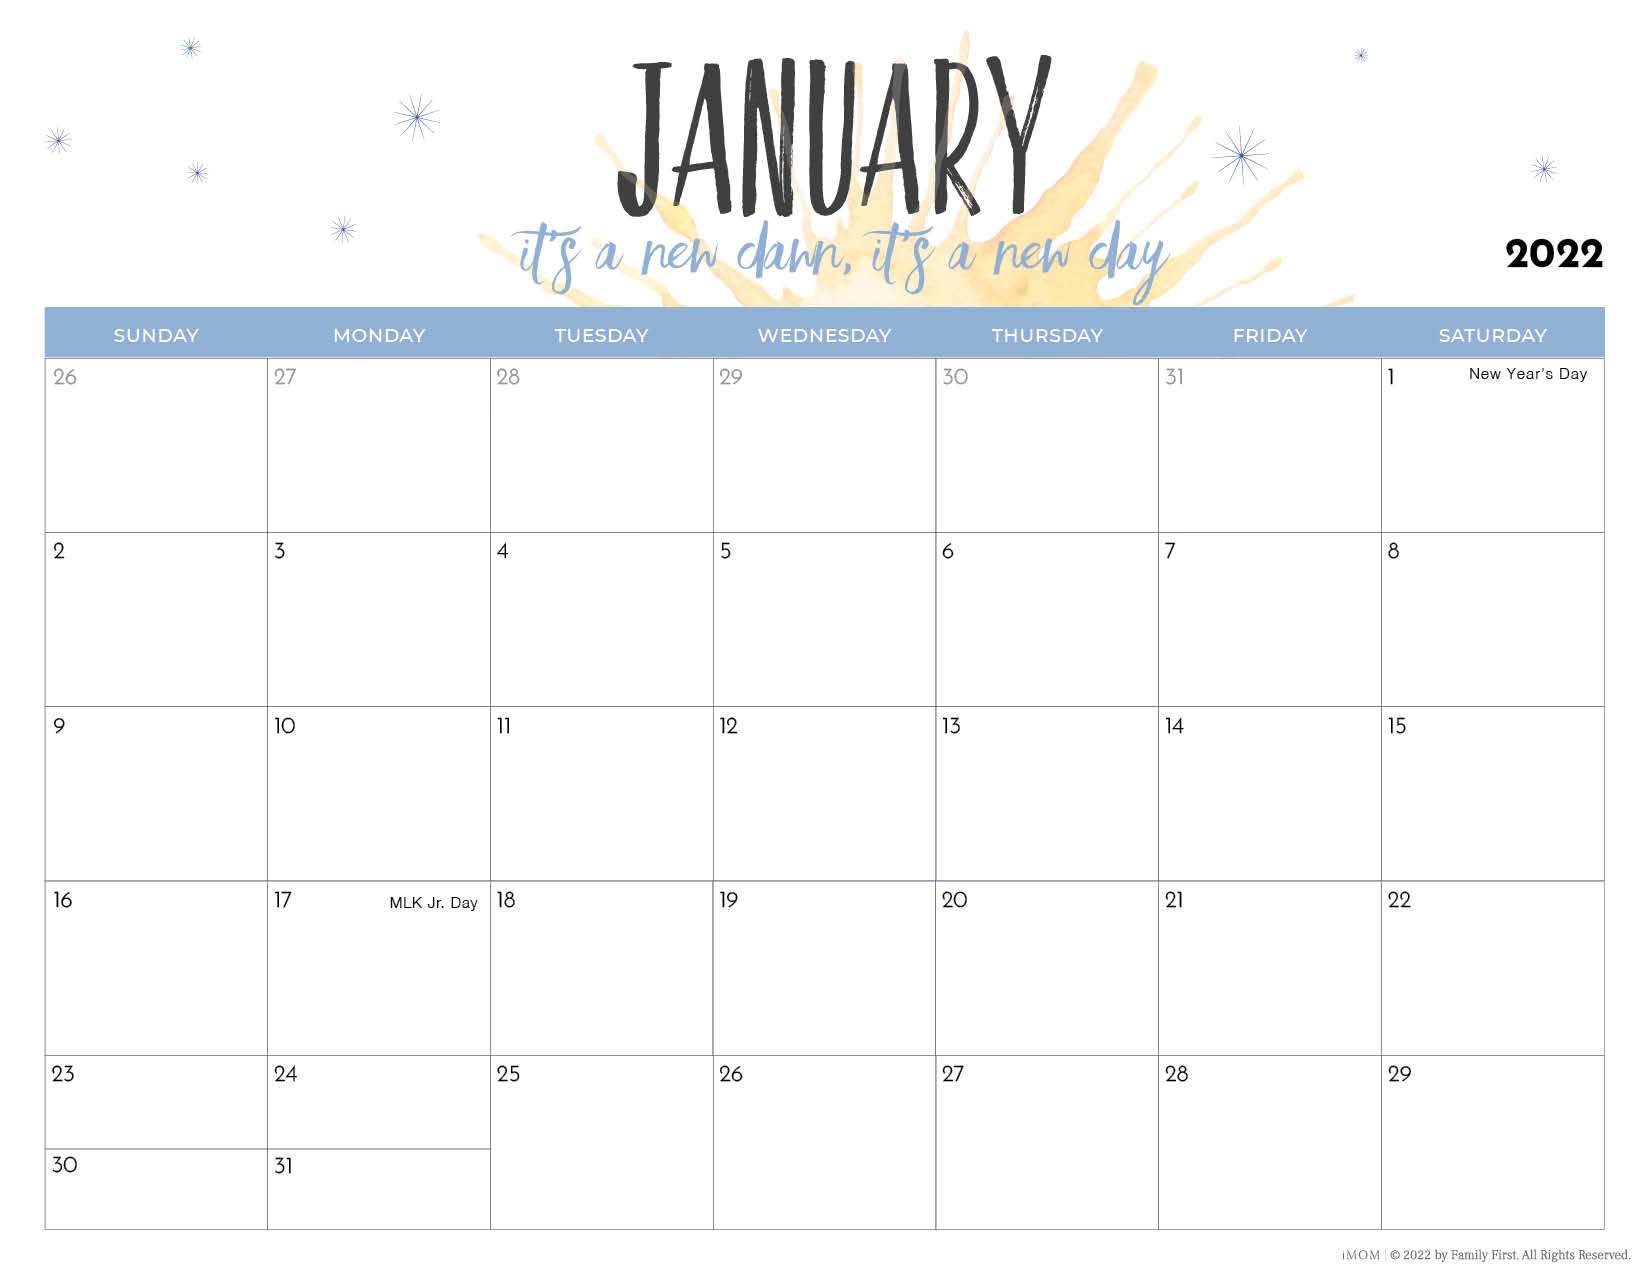 Free Downloadable 2022 Calendar 2022 Printable Calendars For Moms - Imom